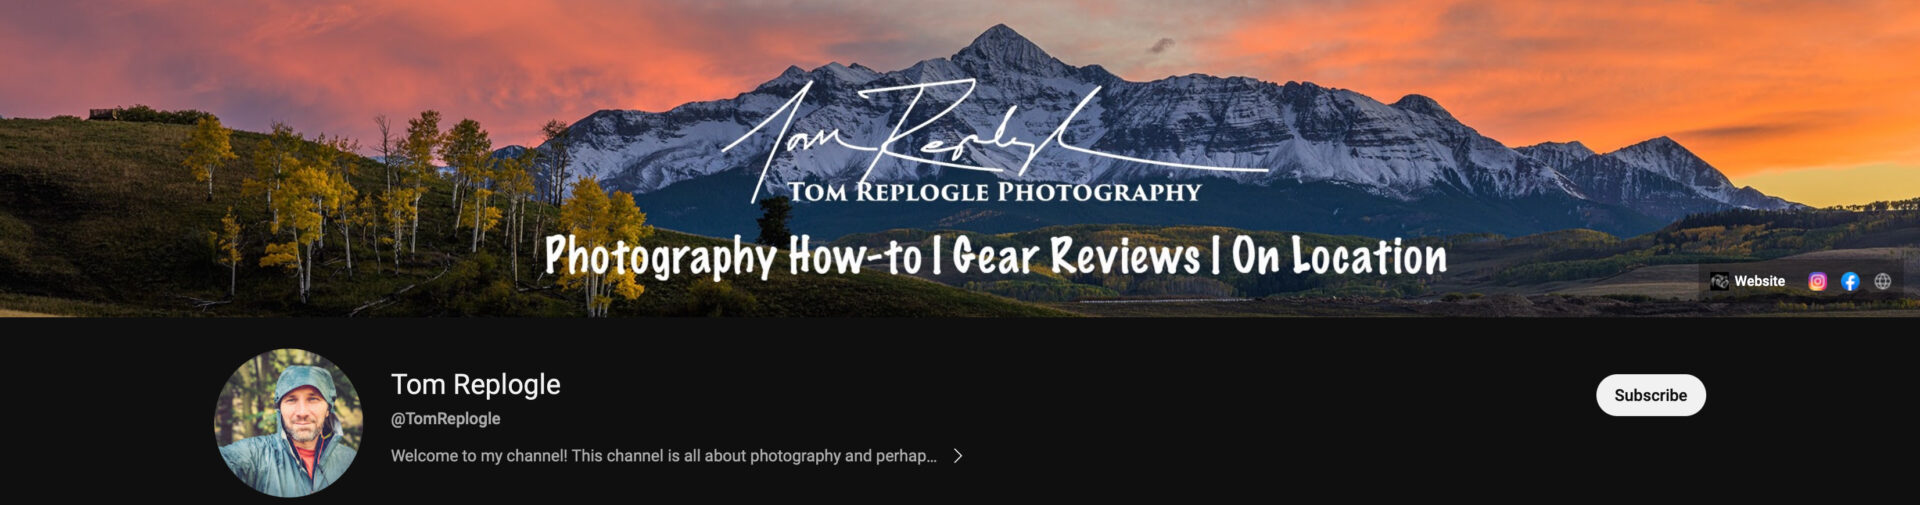 Tom Replogle YouTube Channel Banner